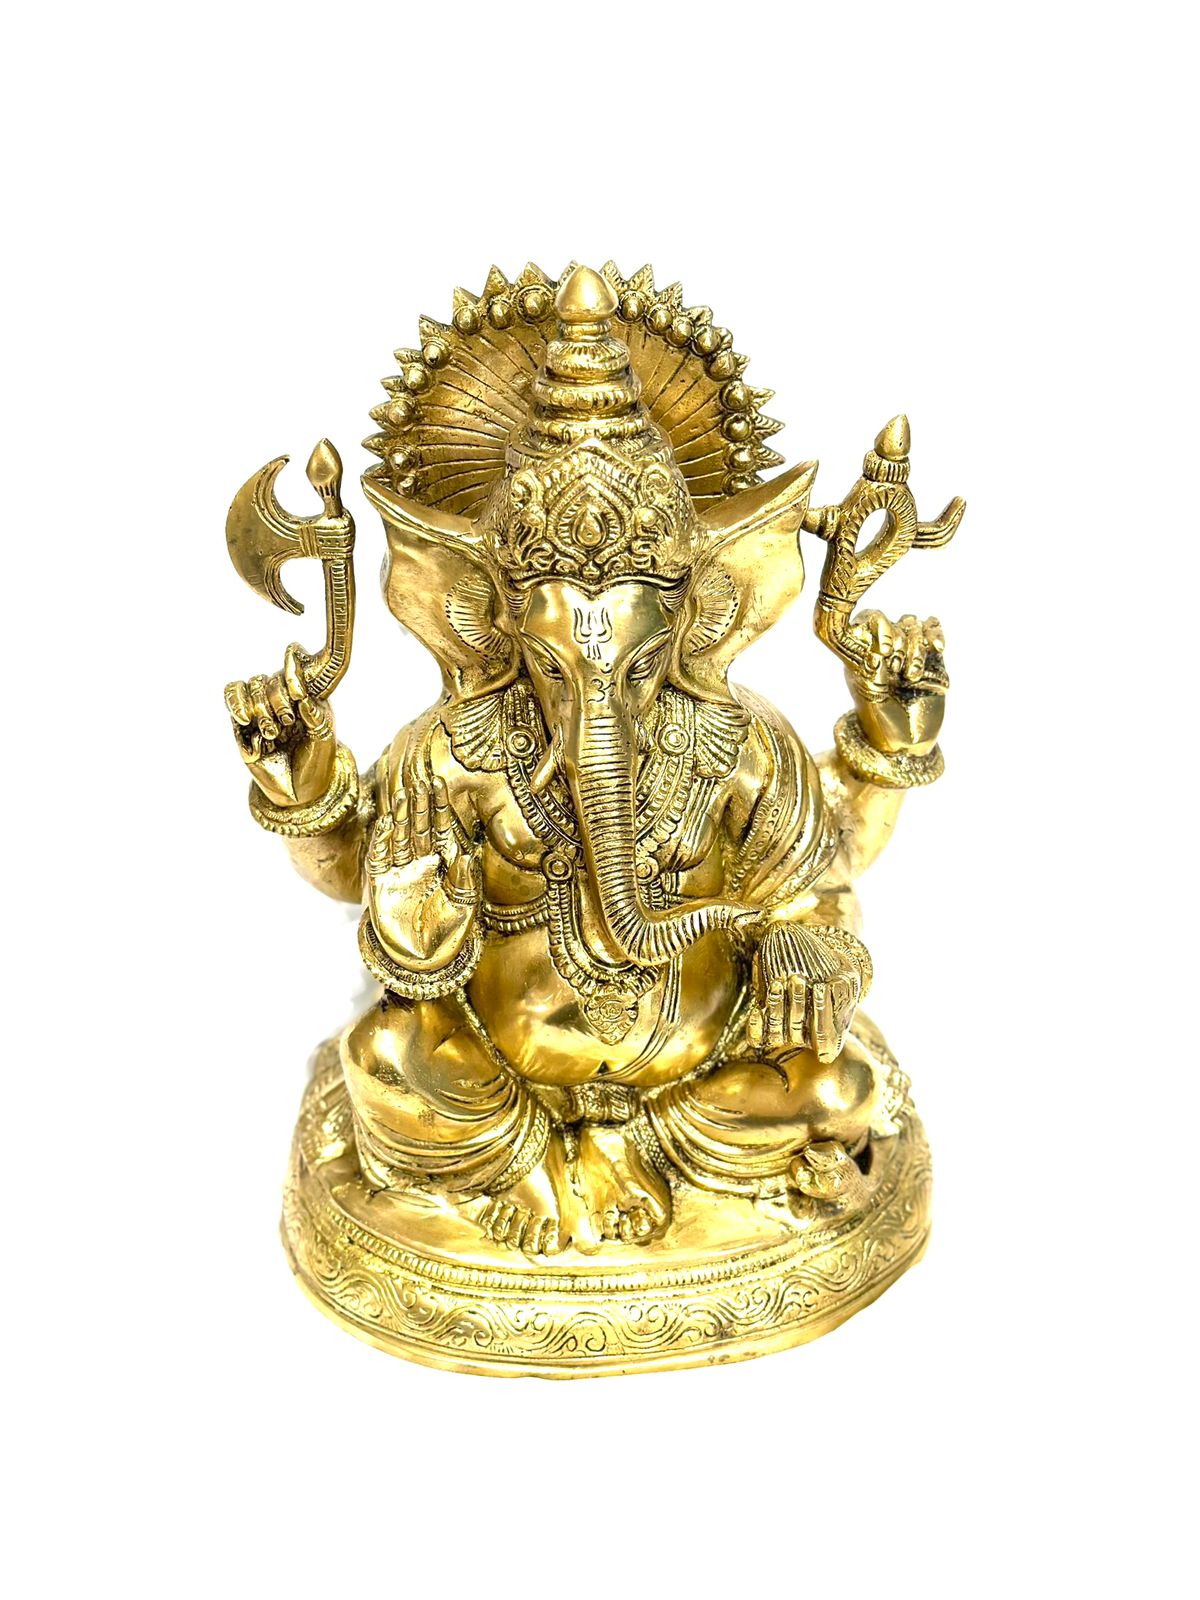 God Ganesha Brass Creations Ganpati Décor For Shop Home Entrance By Tamrapatra